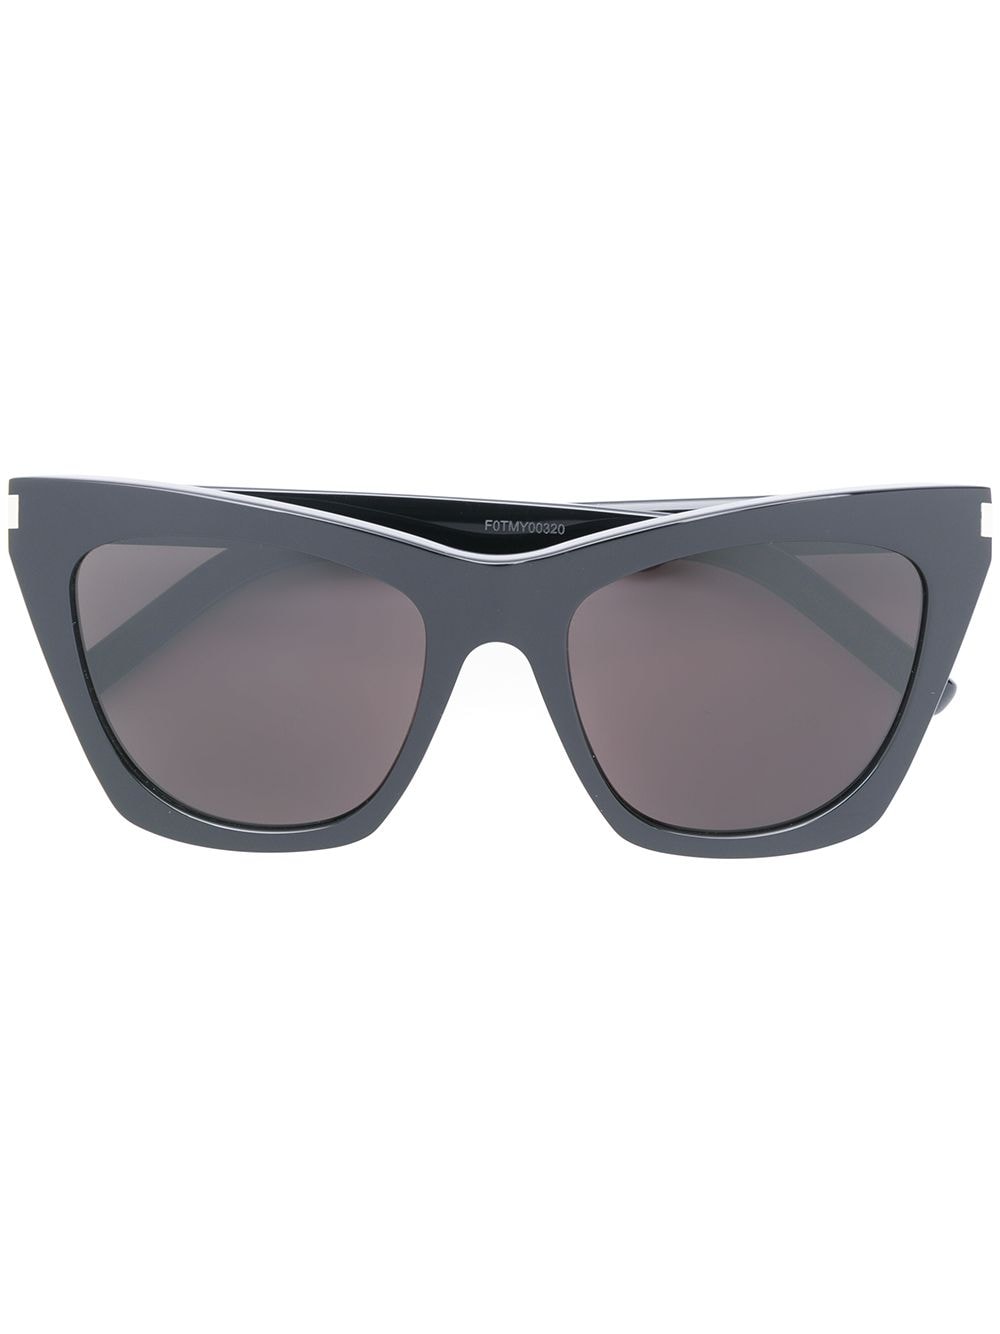 Saint Laurent Eyewear Kate sunglasses - Black von Saint Laurent Eyewear